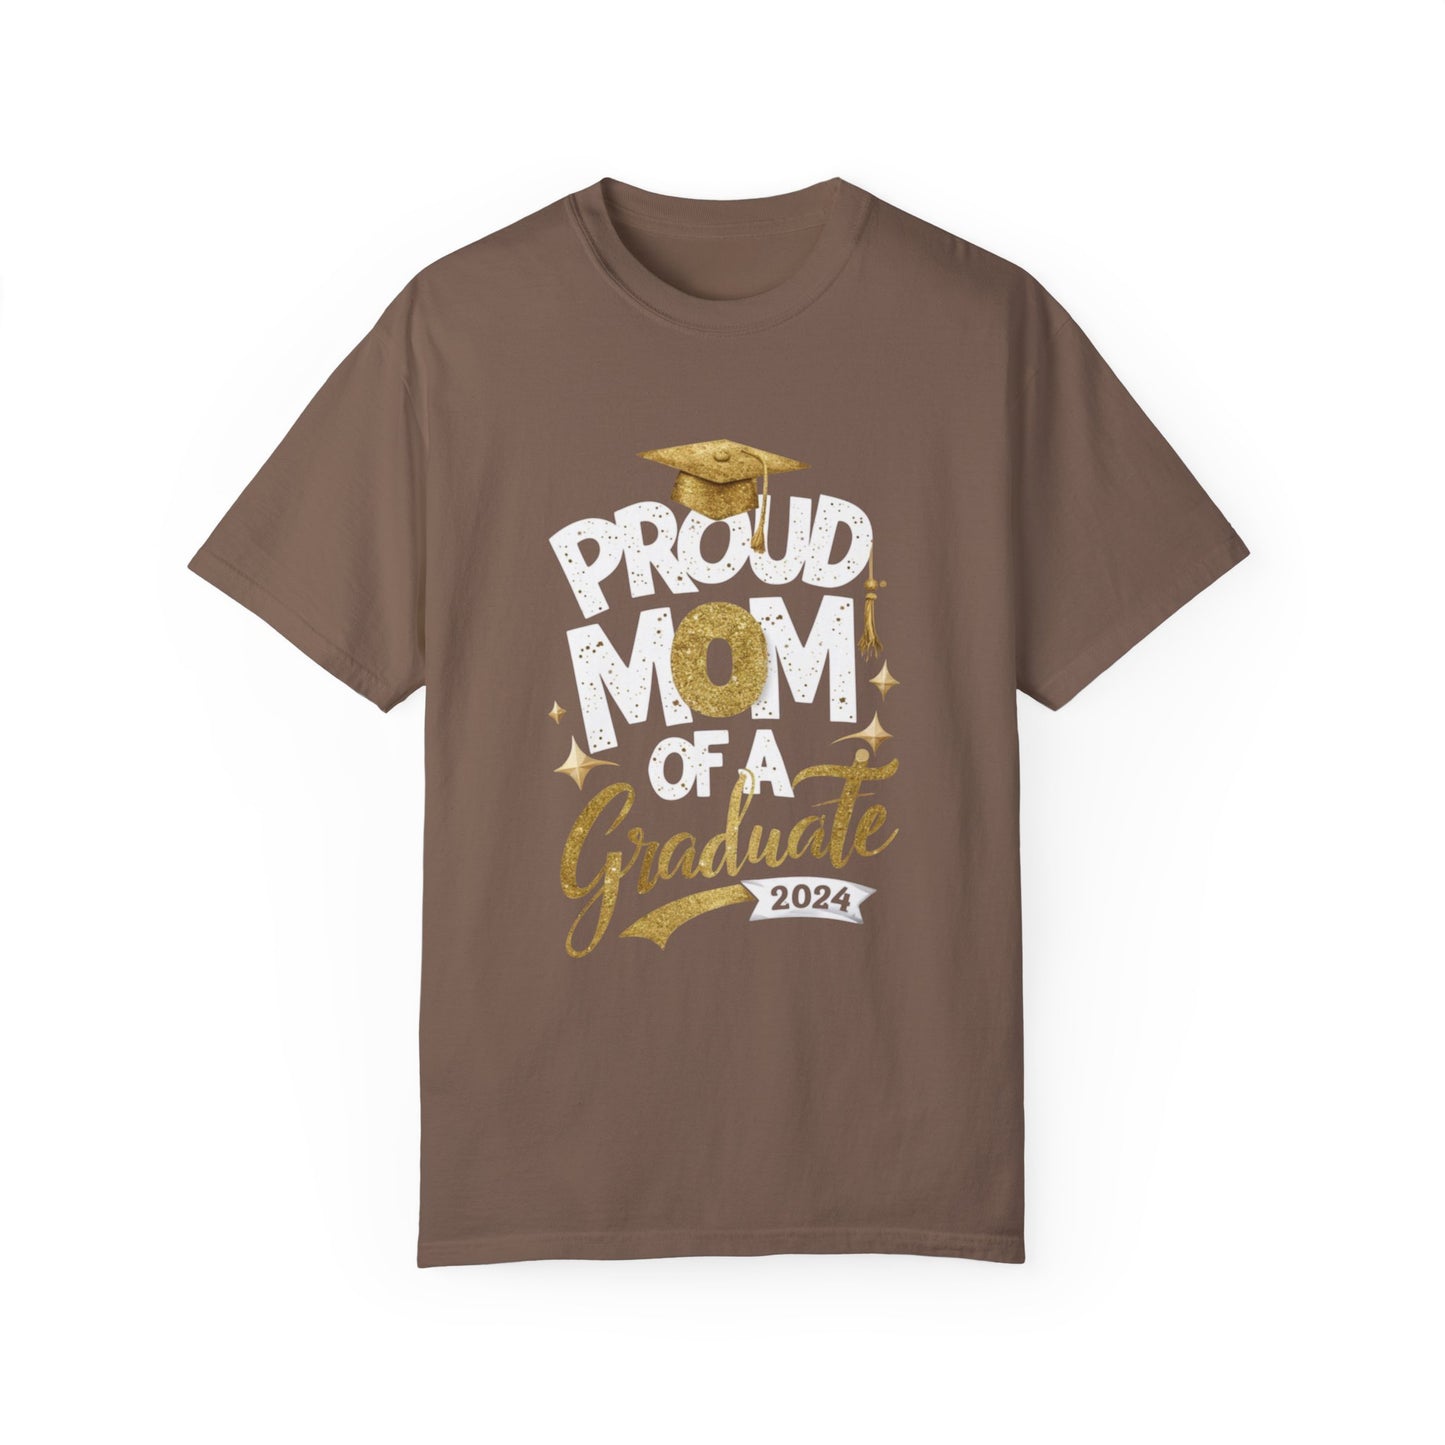 Proud Mom of a 2024 Graduate Unisex Garment-dyed T-shirt Cotton Funny Humorous Graphic Soft Premium Unisex Men Women Espresso T-shirt Birthday Gift-15